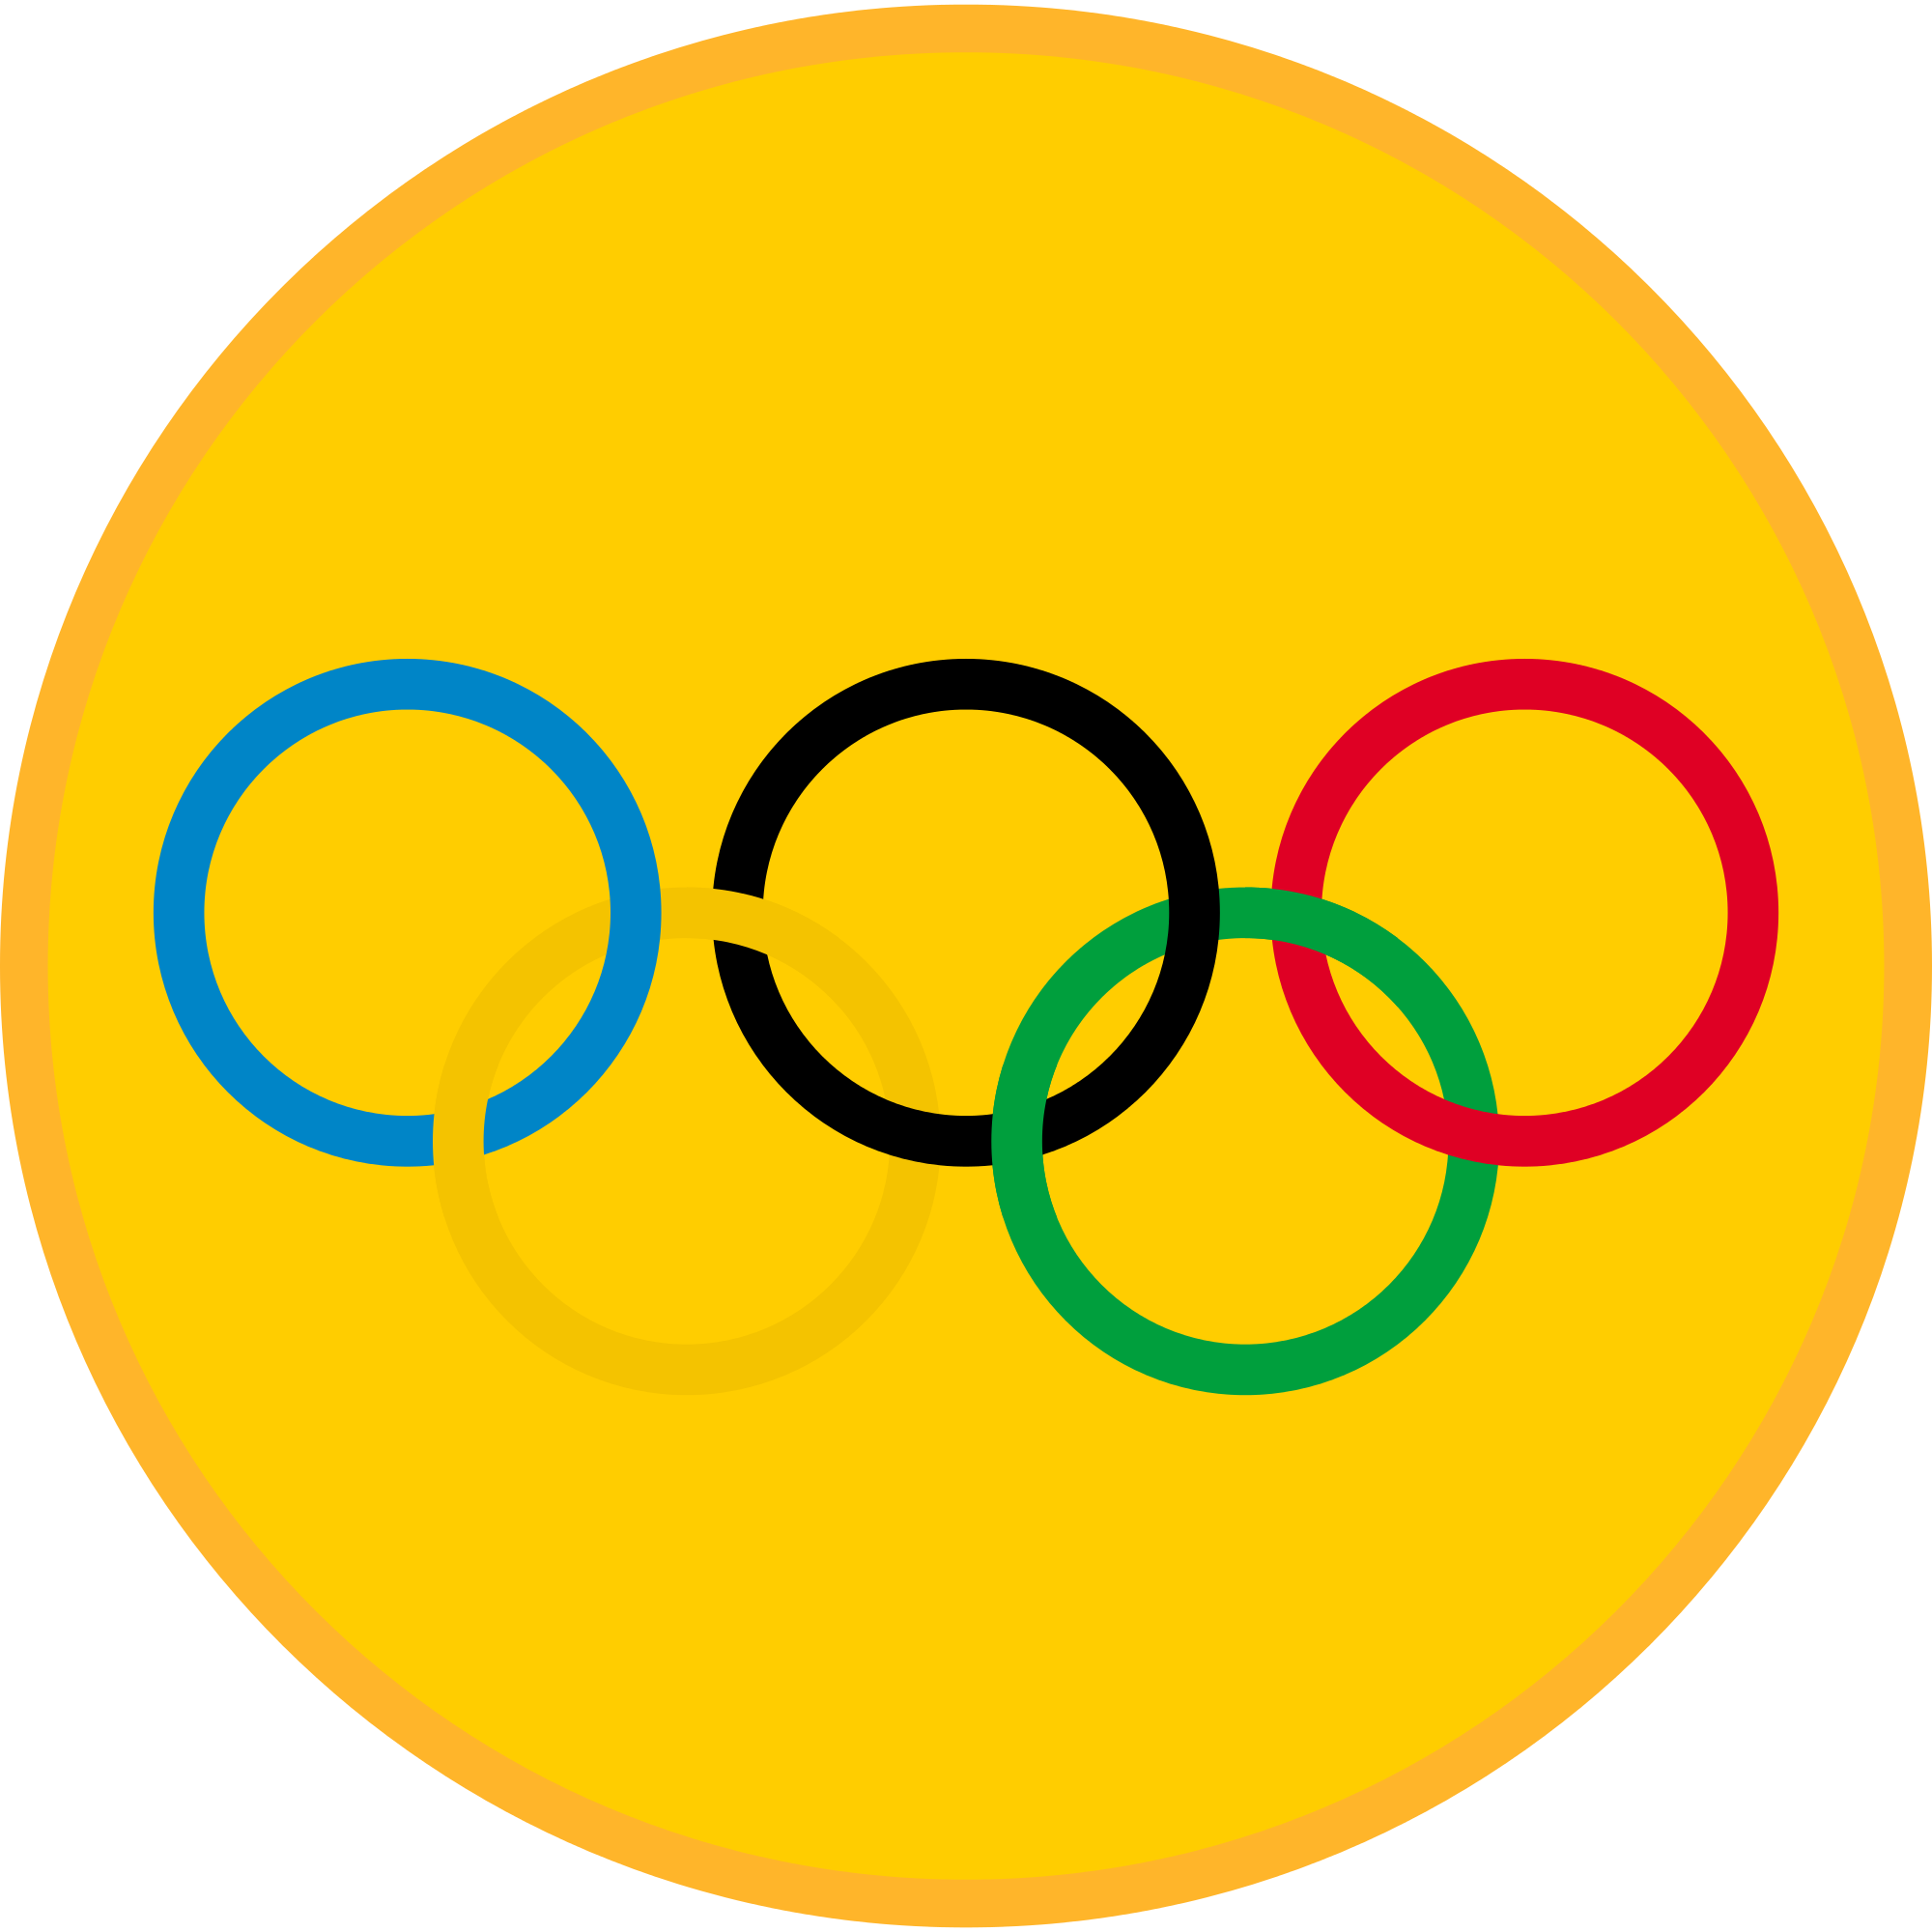 Olympic Gold Metal HD wallpapers, Desktop wallpaper - most viewed